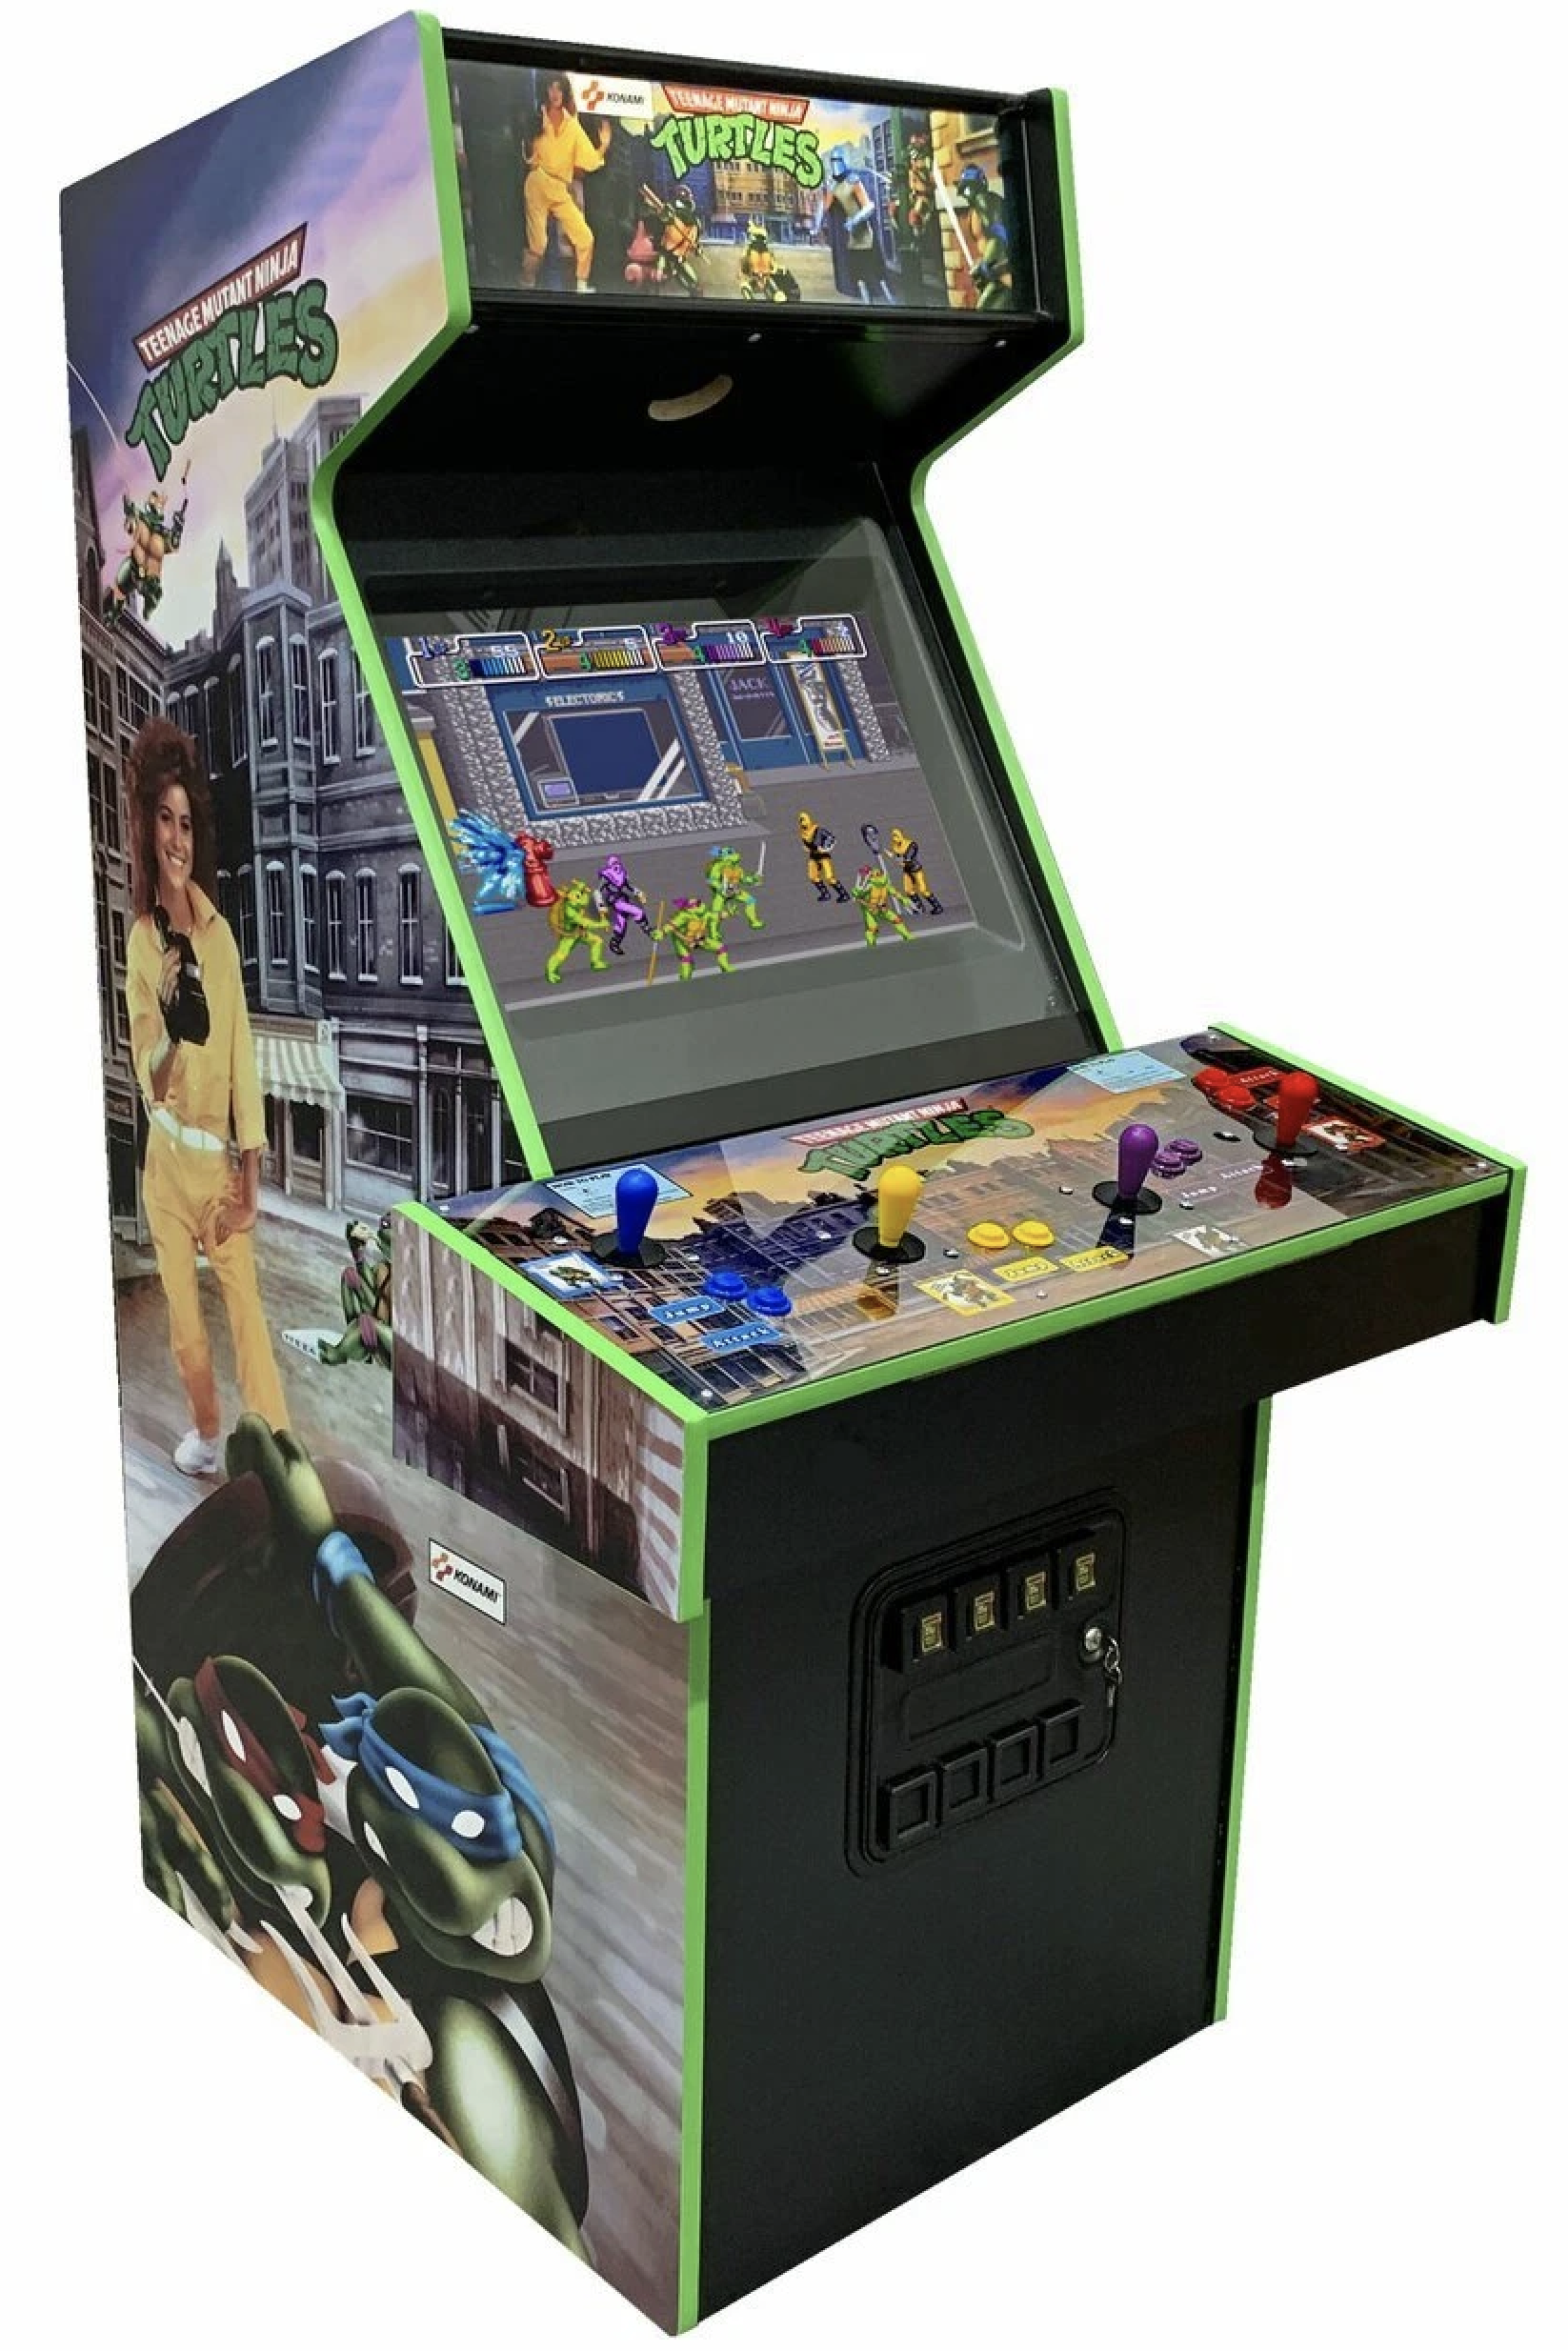 Tmnt arcade